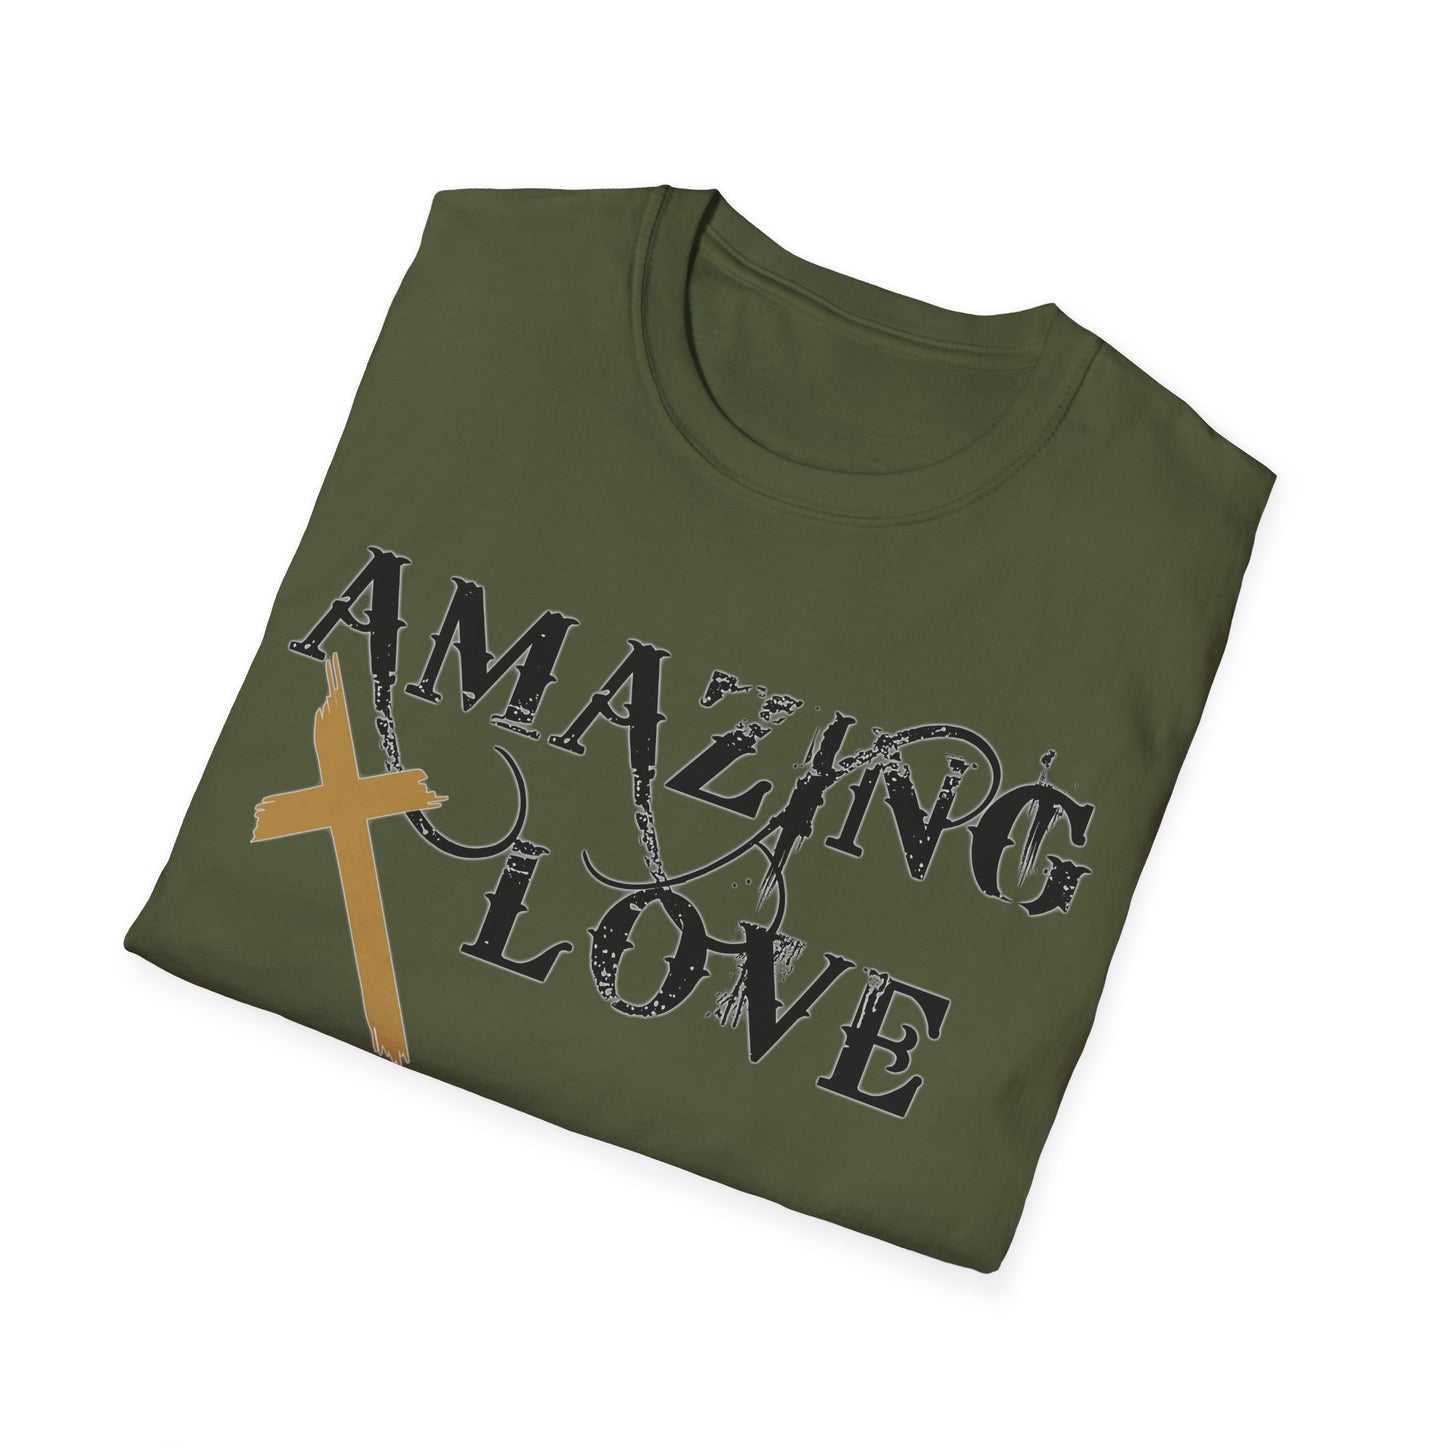 Amazing Love mens T-Shirt